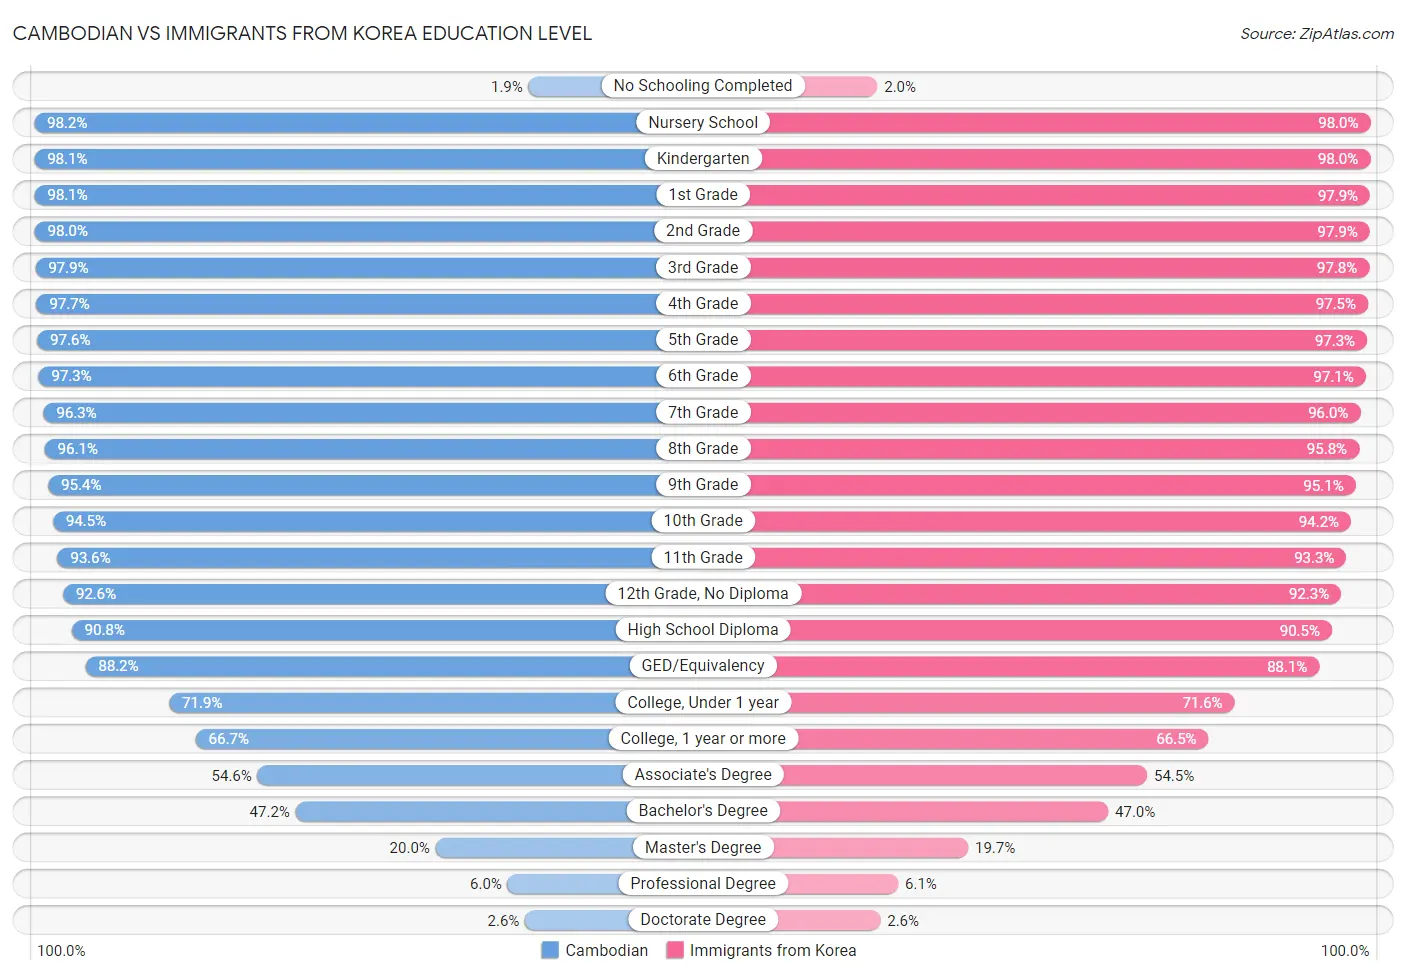 Cambodian vs Immigrants from Korea Education Level